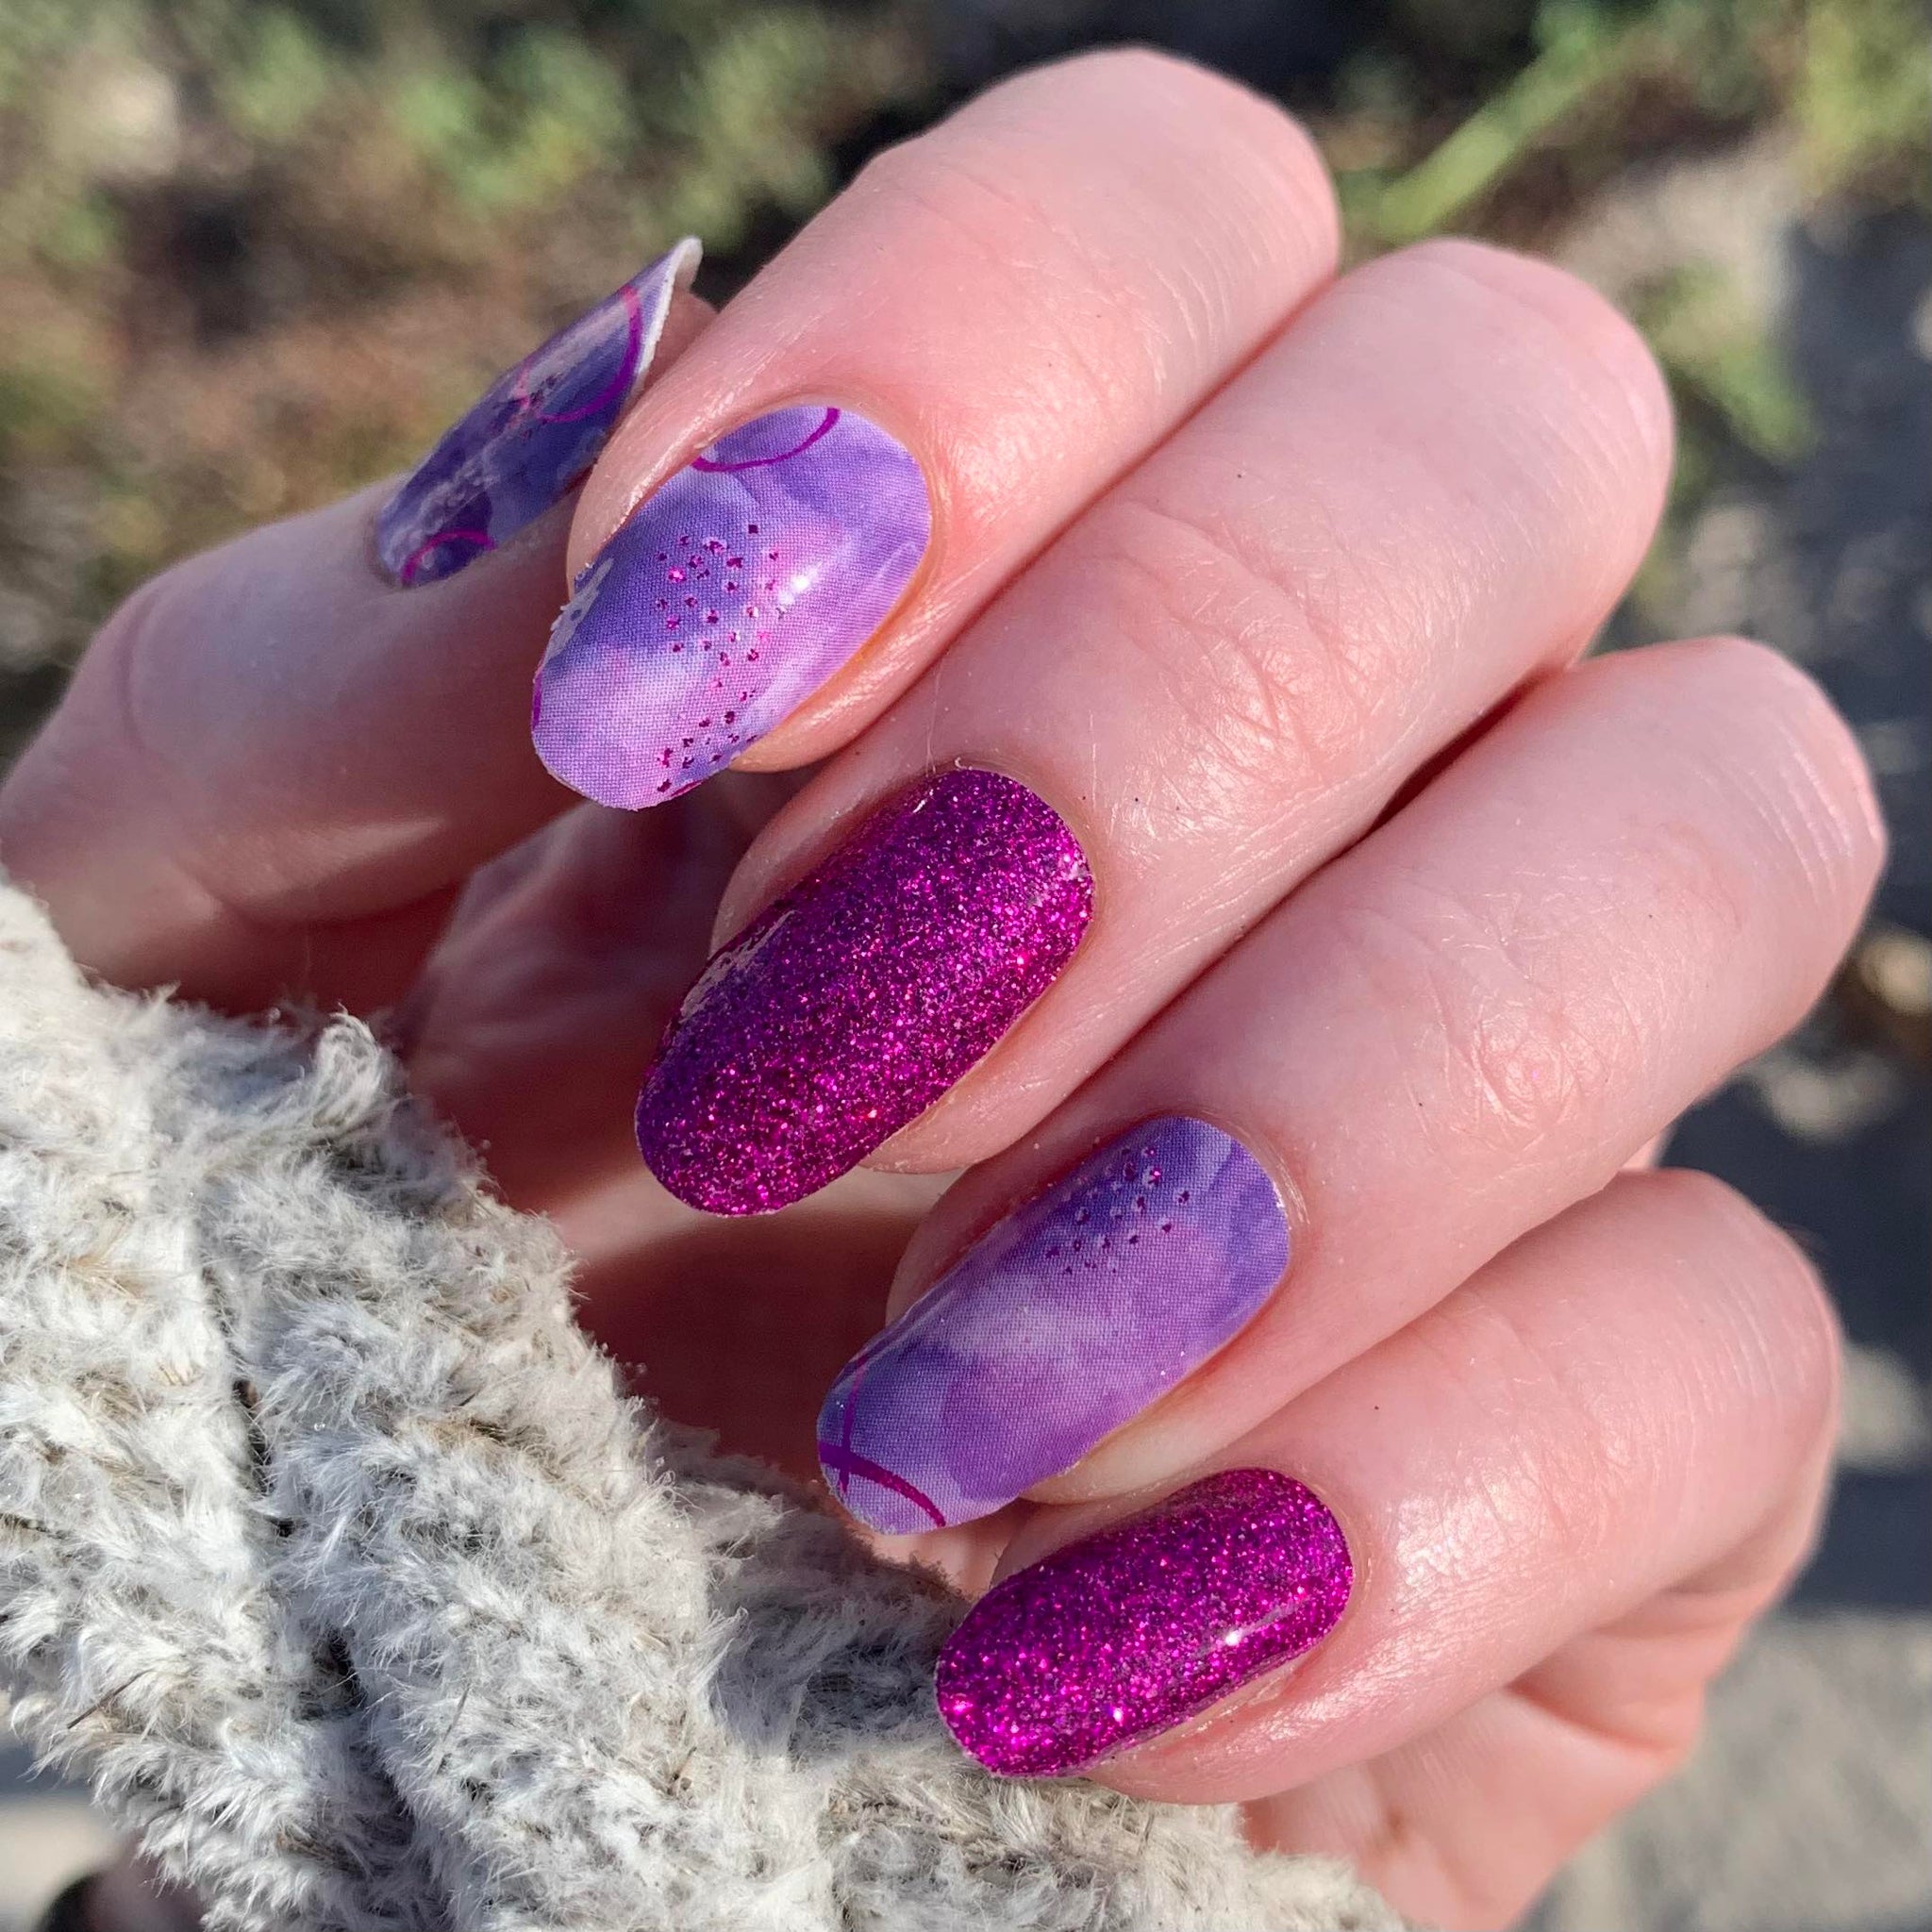 O.P. nails in maroon raspberry #nails #beautiful #fall | Wine nails, Berry  nails, Nails